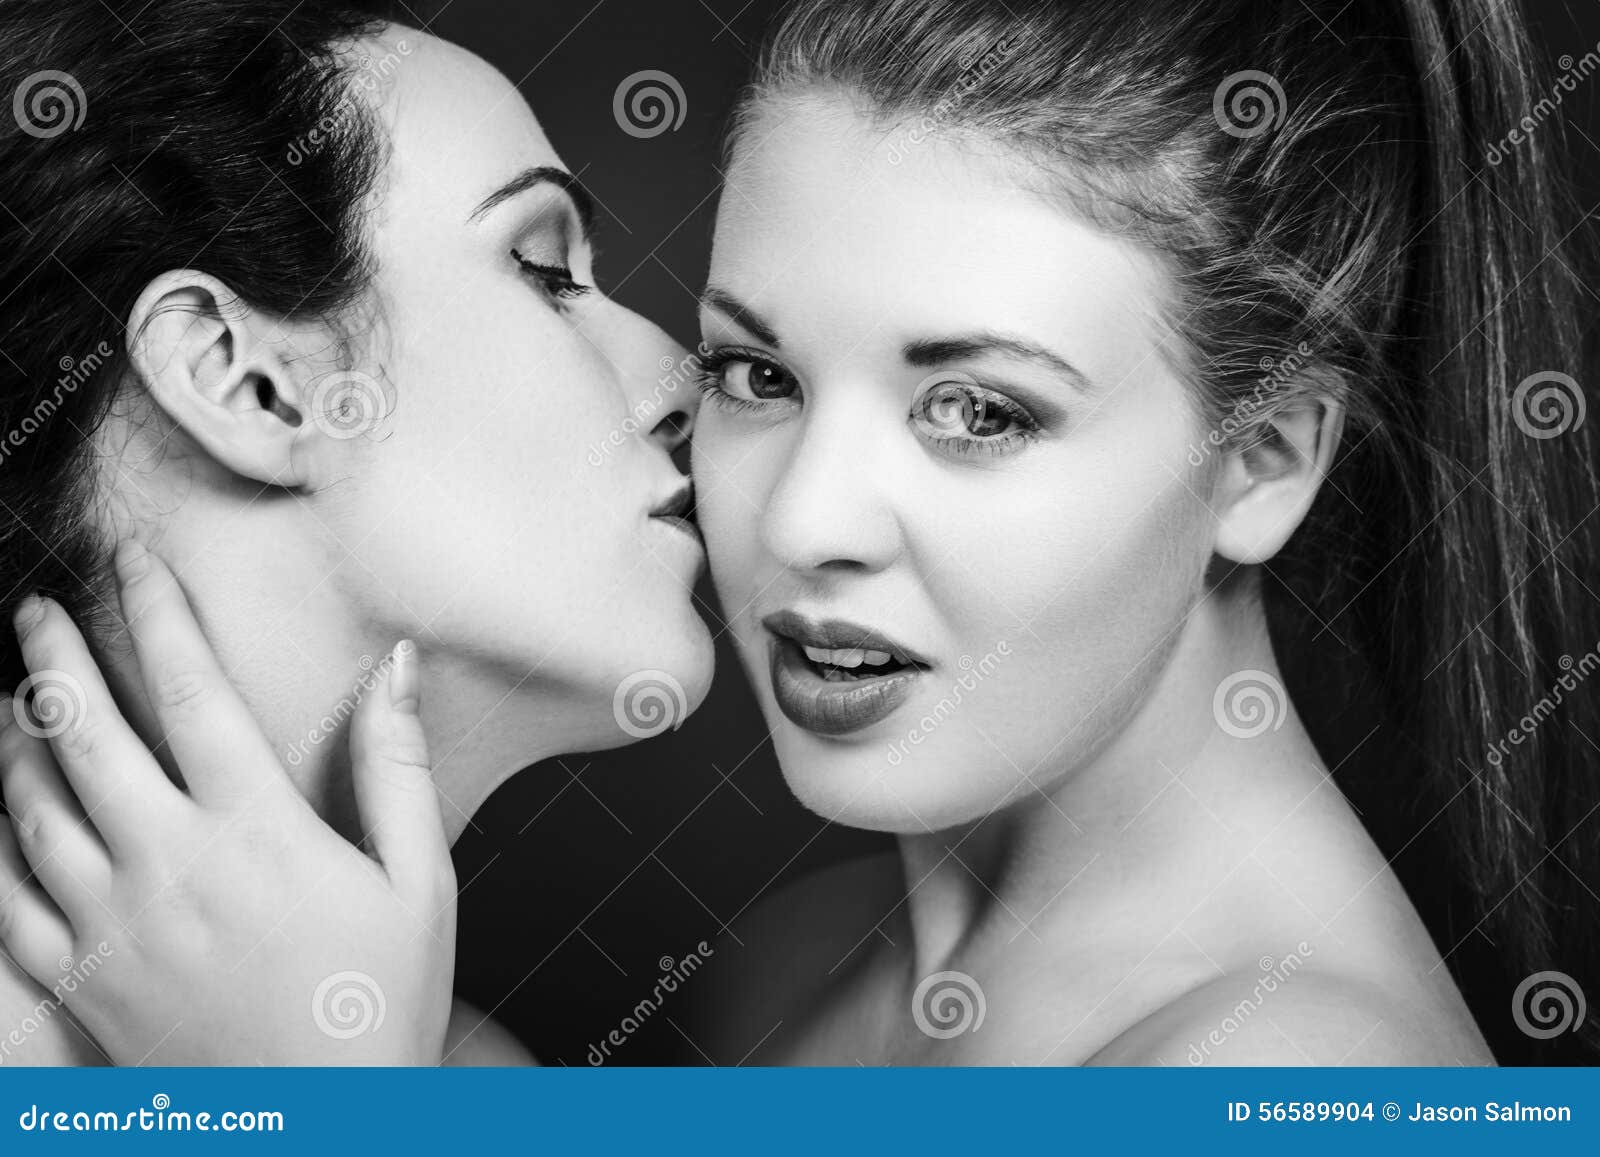 Two girls lick. Сибил LEZKISS. Two women kissing. Two women in Love.